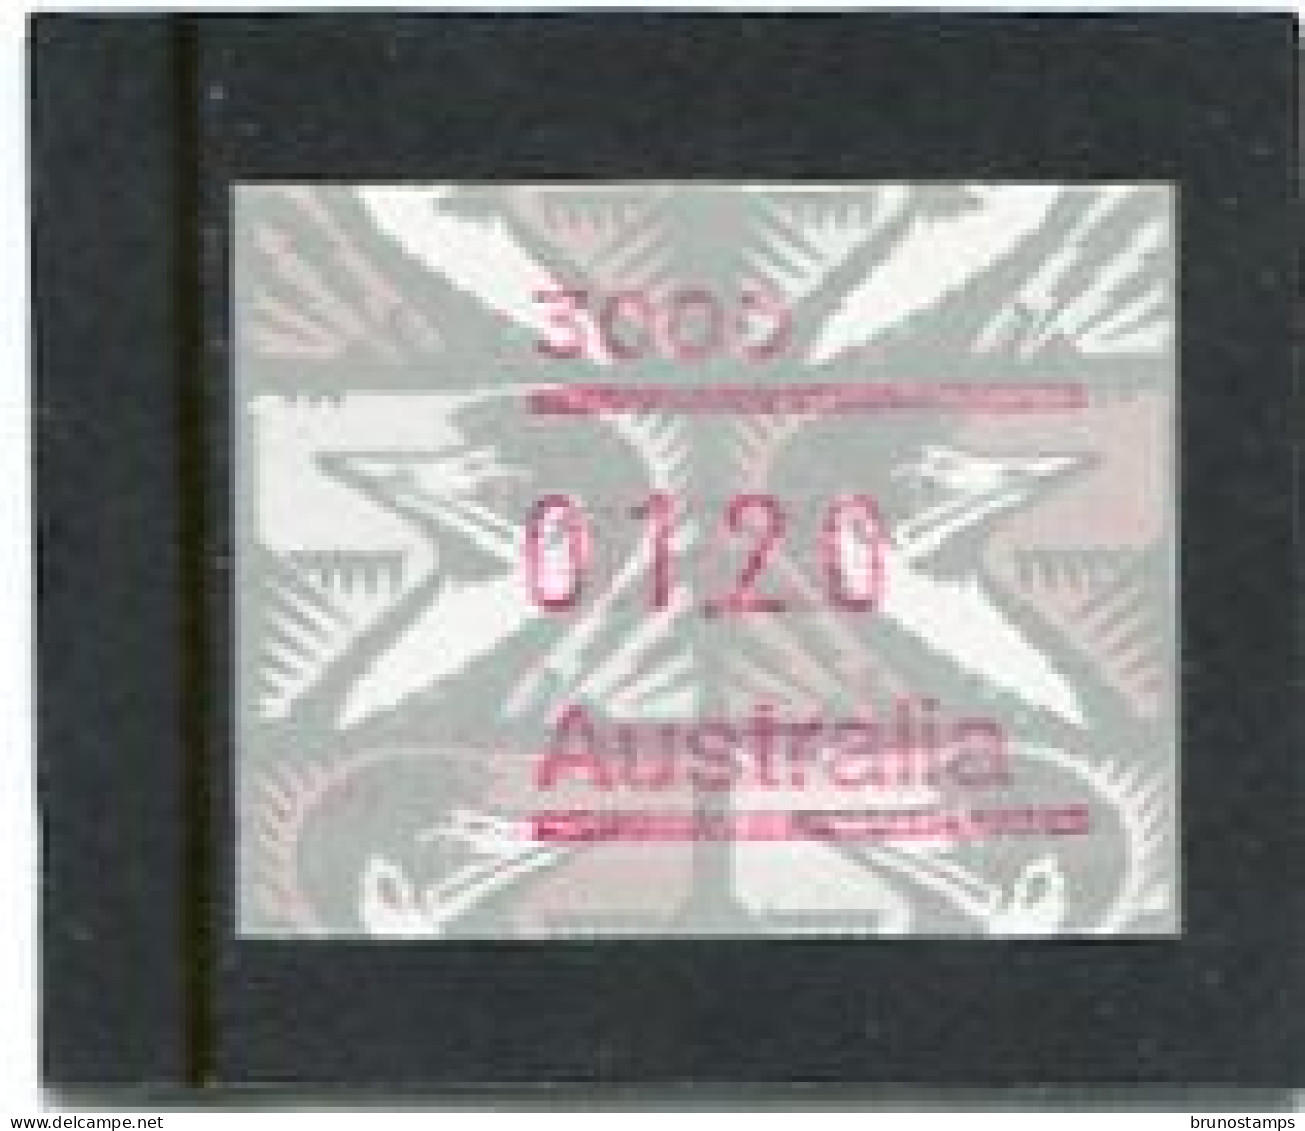 AUSTRALIA - 1992  1.20$  FRAMA  EMU  POSTCODE  3000  (MELBOURNE)  MINT NH - Vignette [ATM]